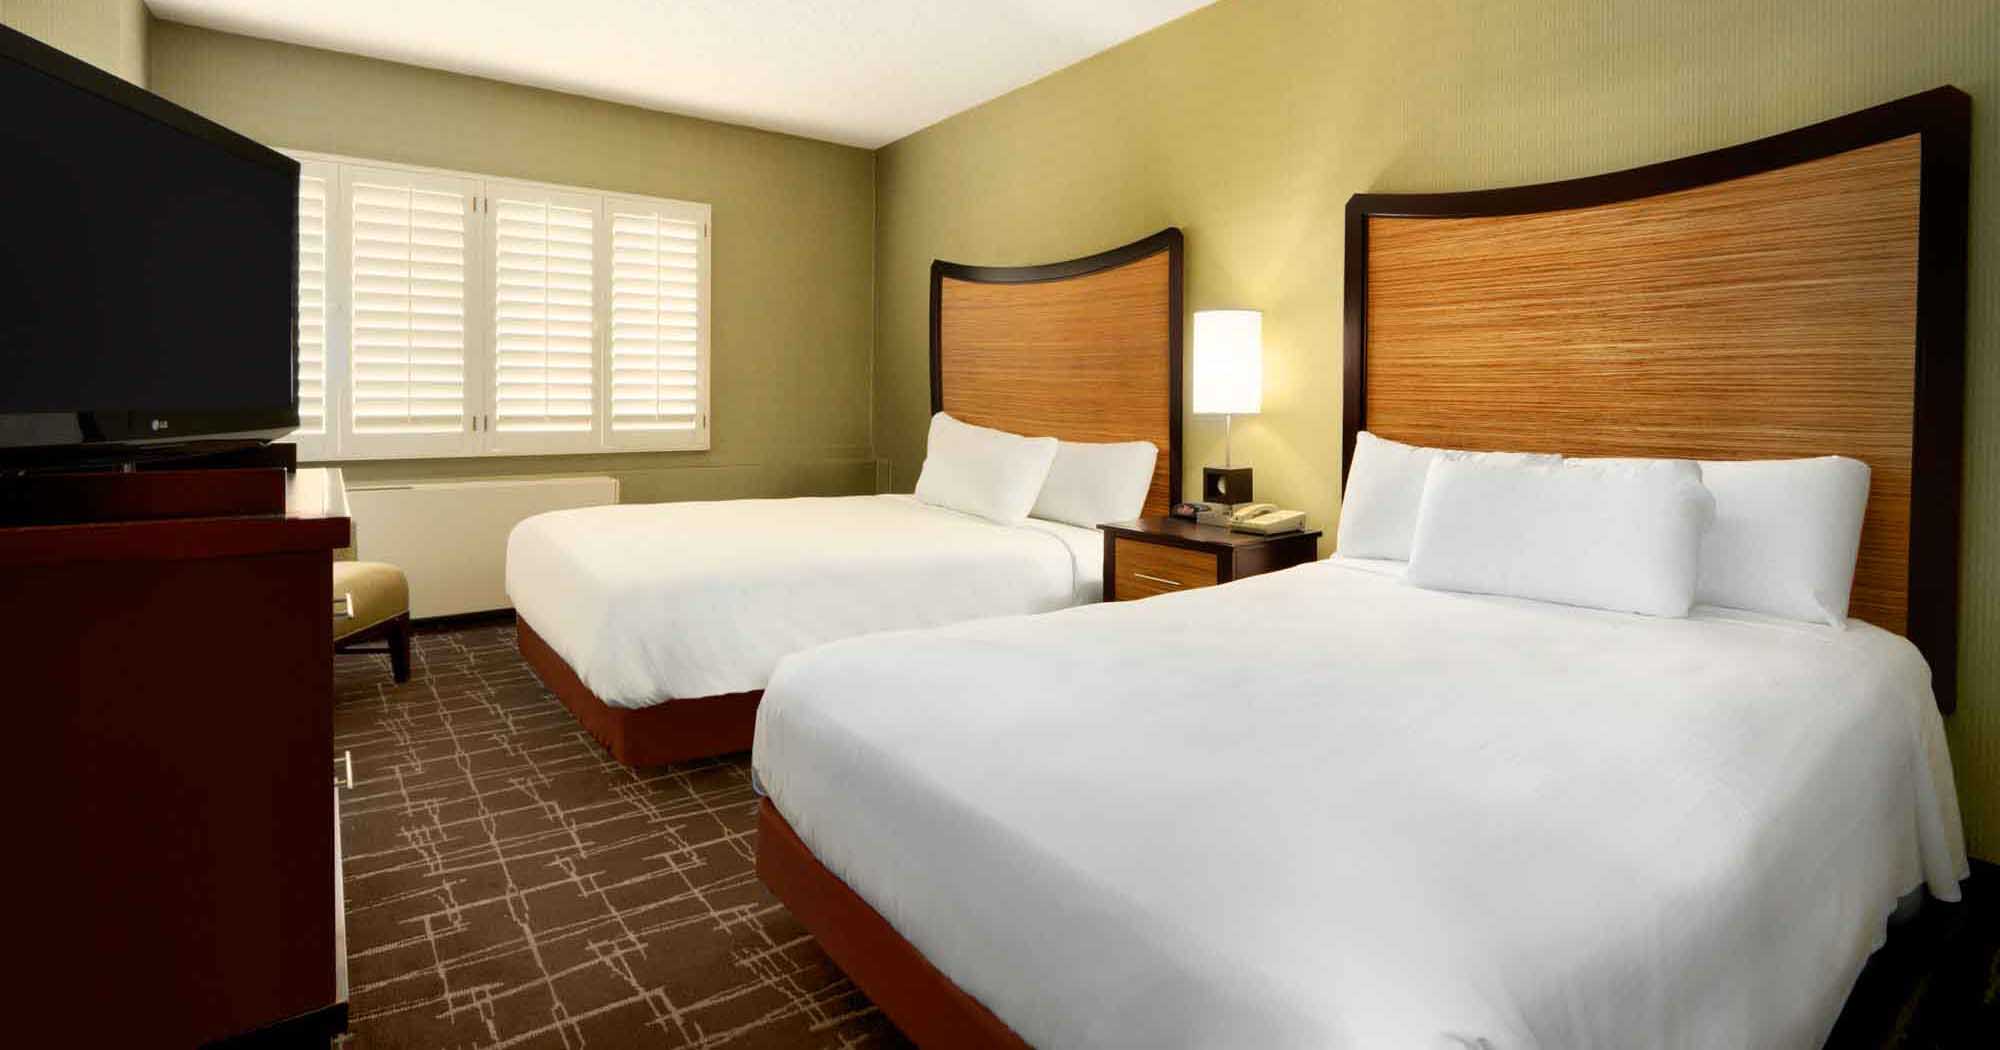 Fremont room Las Vegas hotels